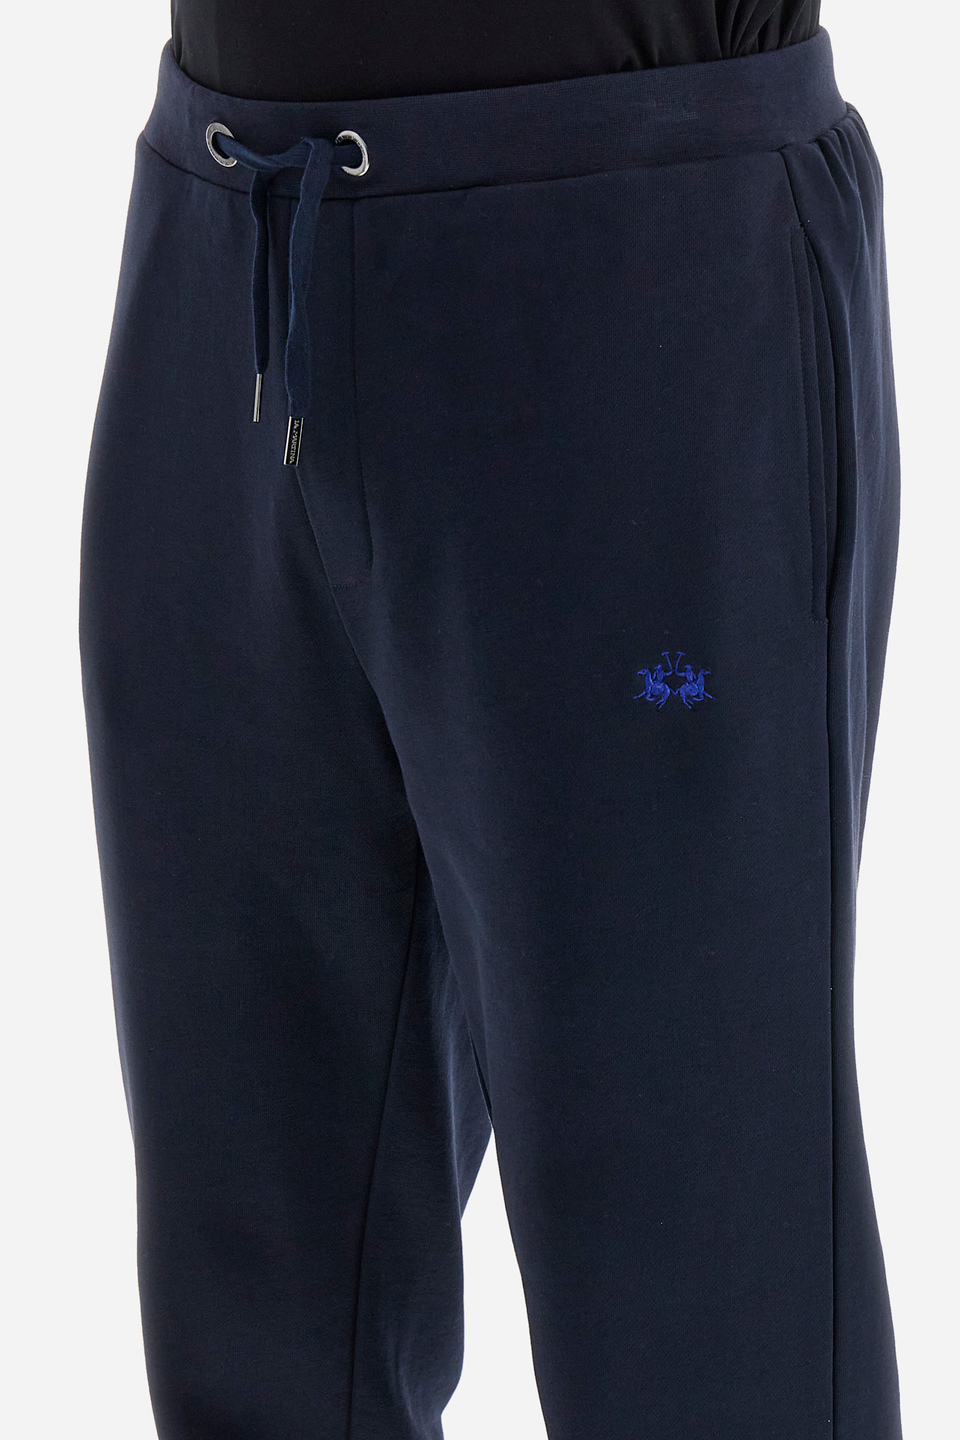 Pantalones de jogging de hombre corte recto - Welton | La Martina - Official Online Shop